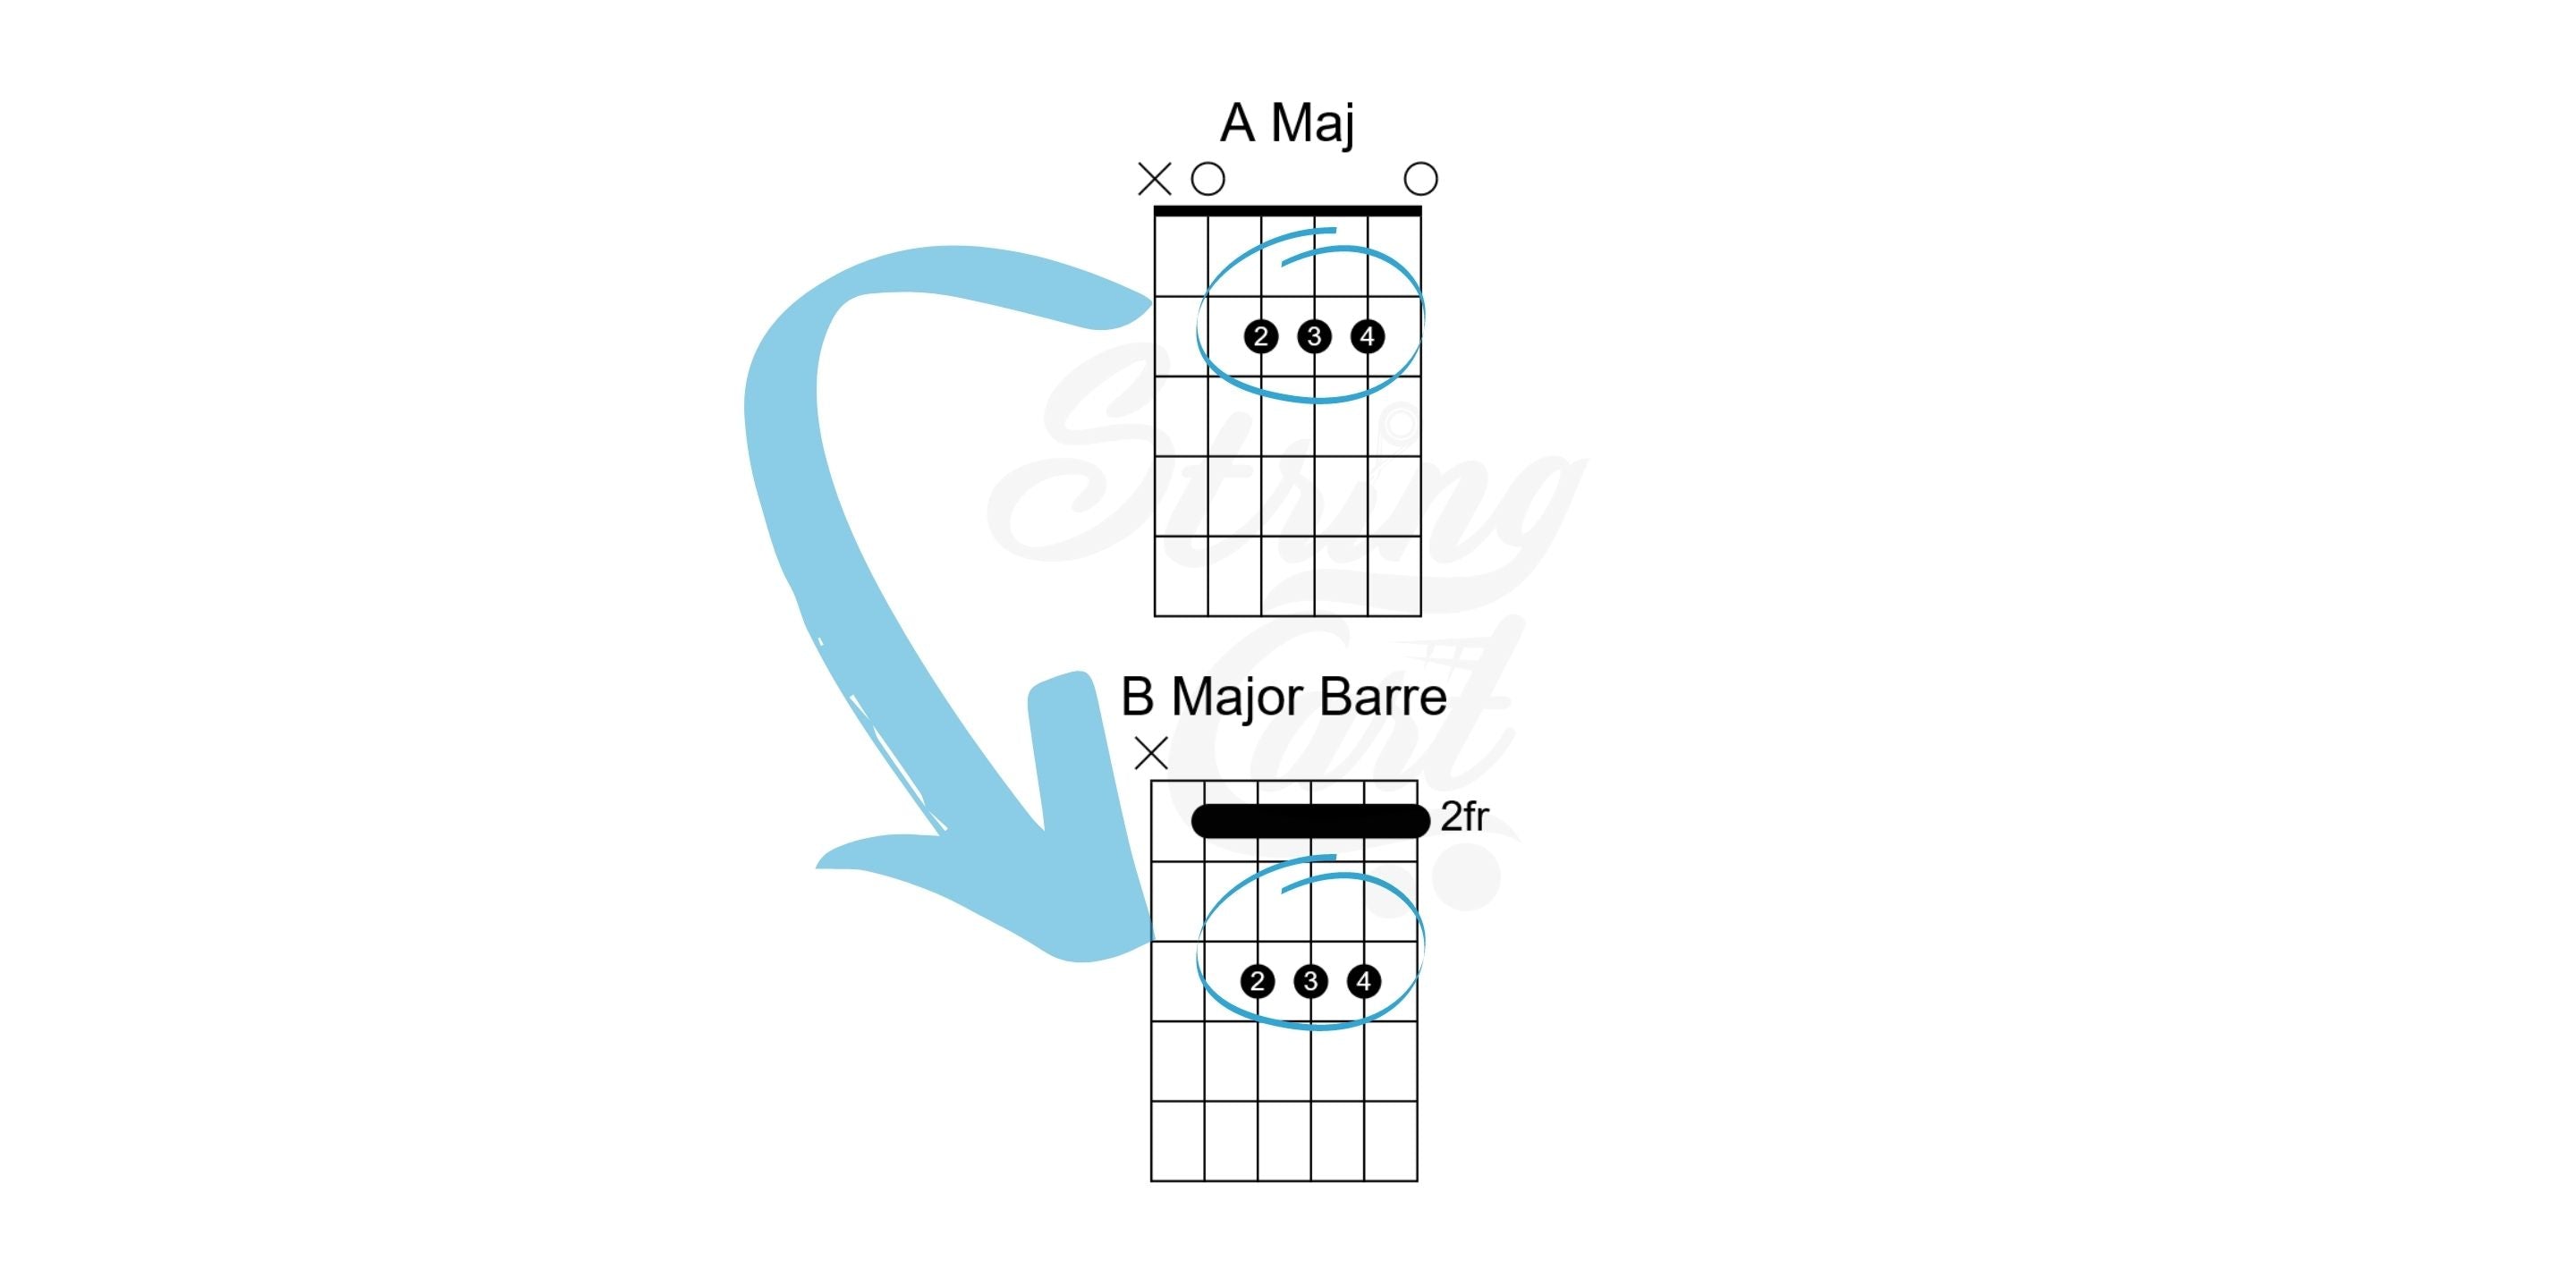 B Major barre Chord Chart Using A Major Shape